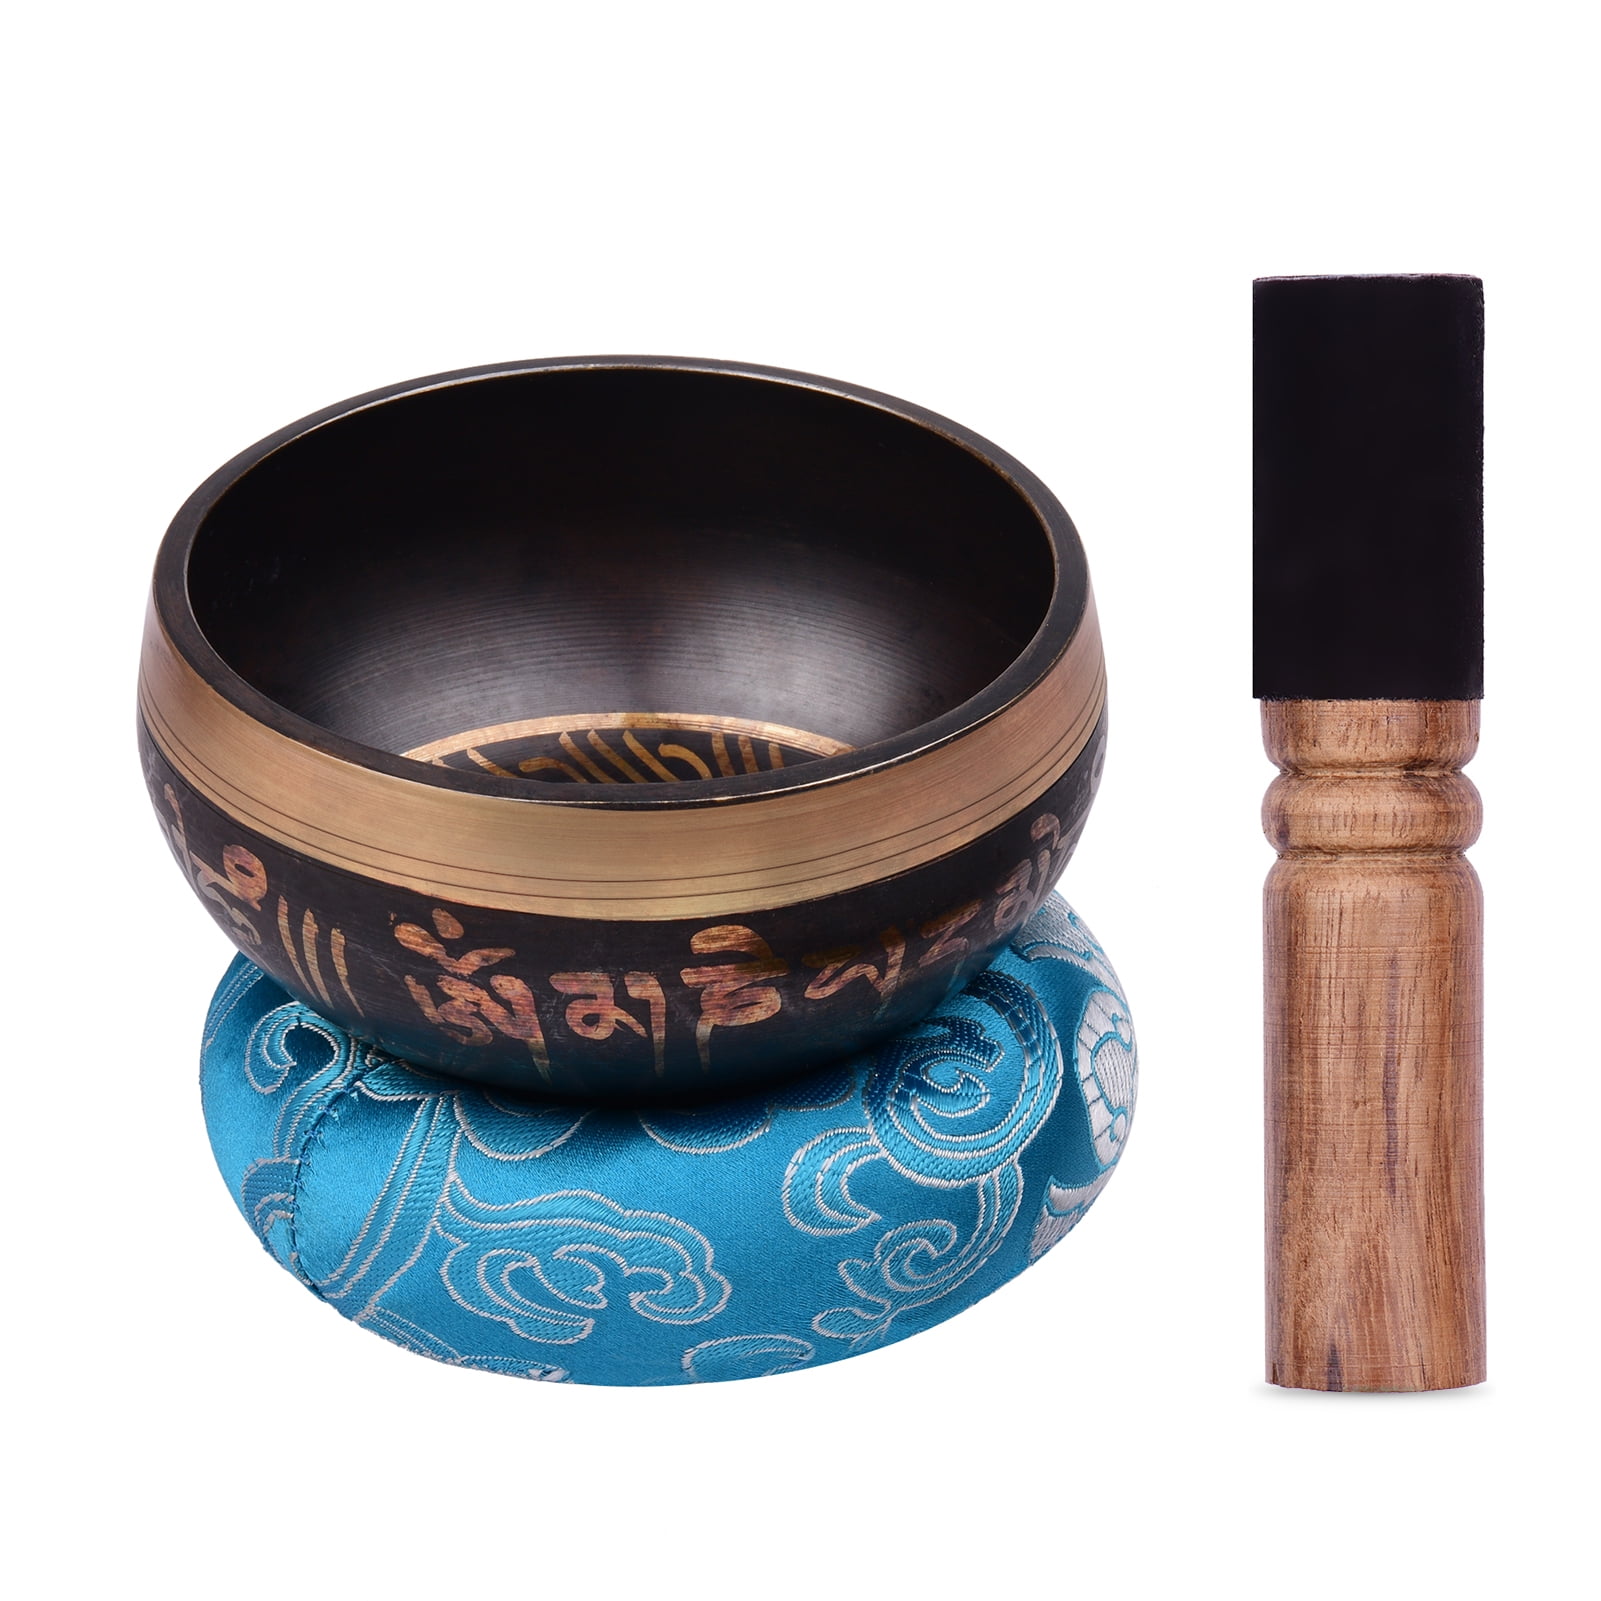 Tibetan Singing Bowl Set 3.2 inch Perfect resonance Meditation Yoga & Chakra Healing Handmade Bowl with wooden Striker for Healing and Mindfulness 